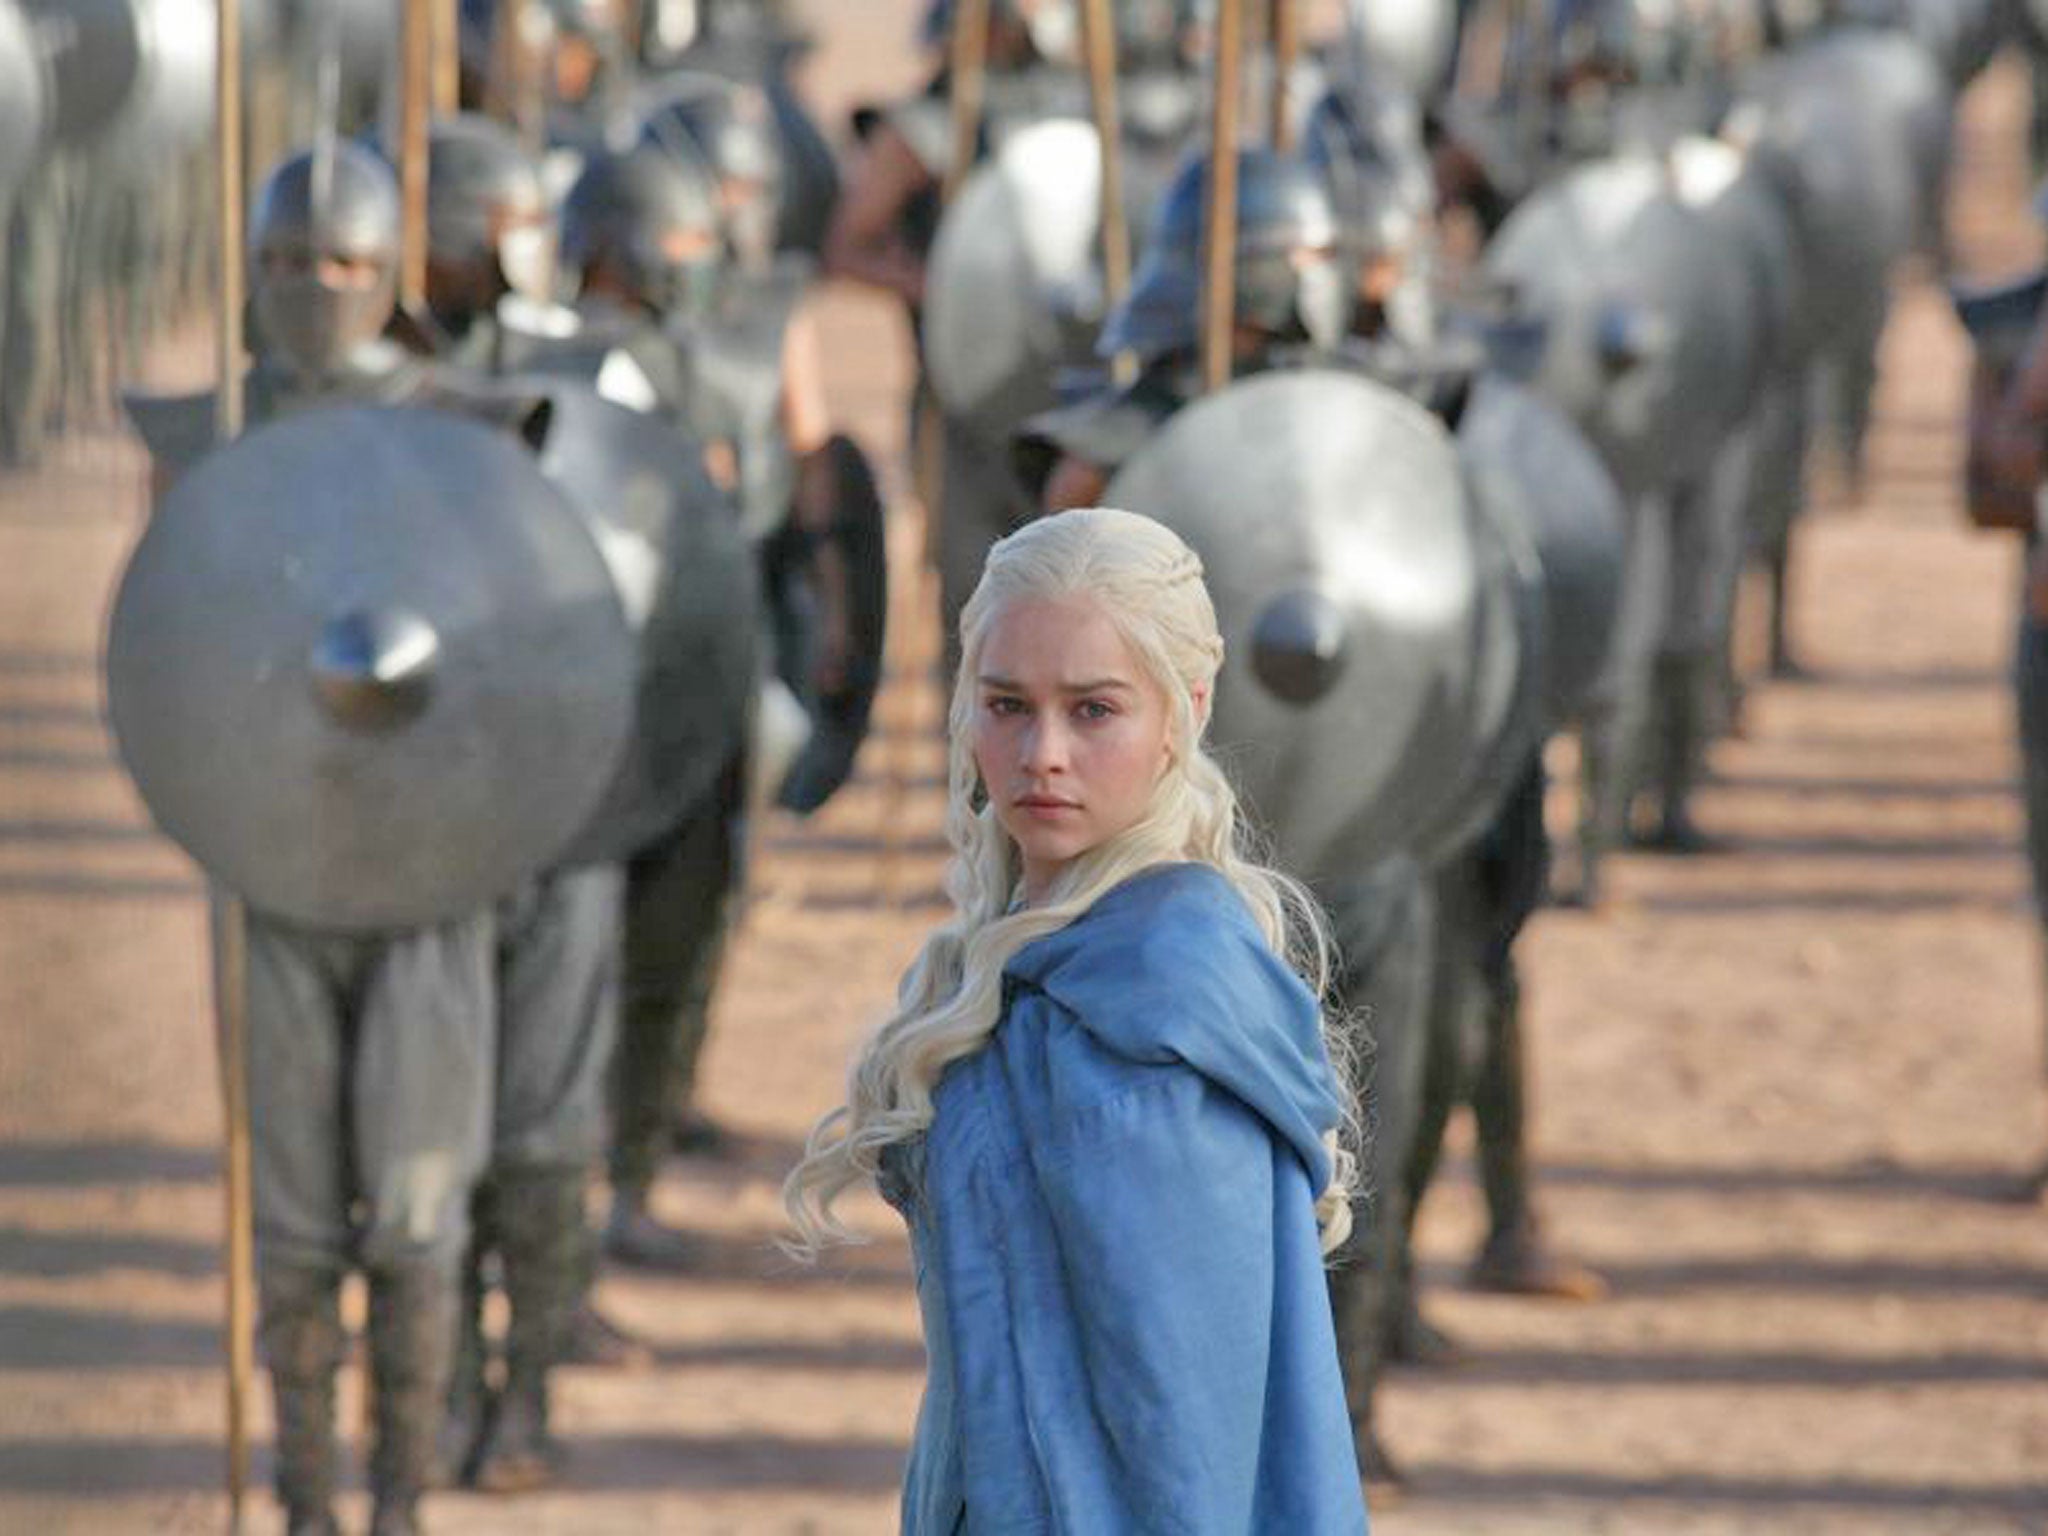 In demand: Emilia Clarke as Daenerys Targaryen in Game of Thrones